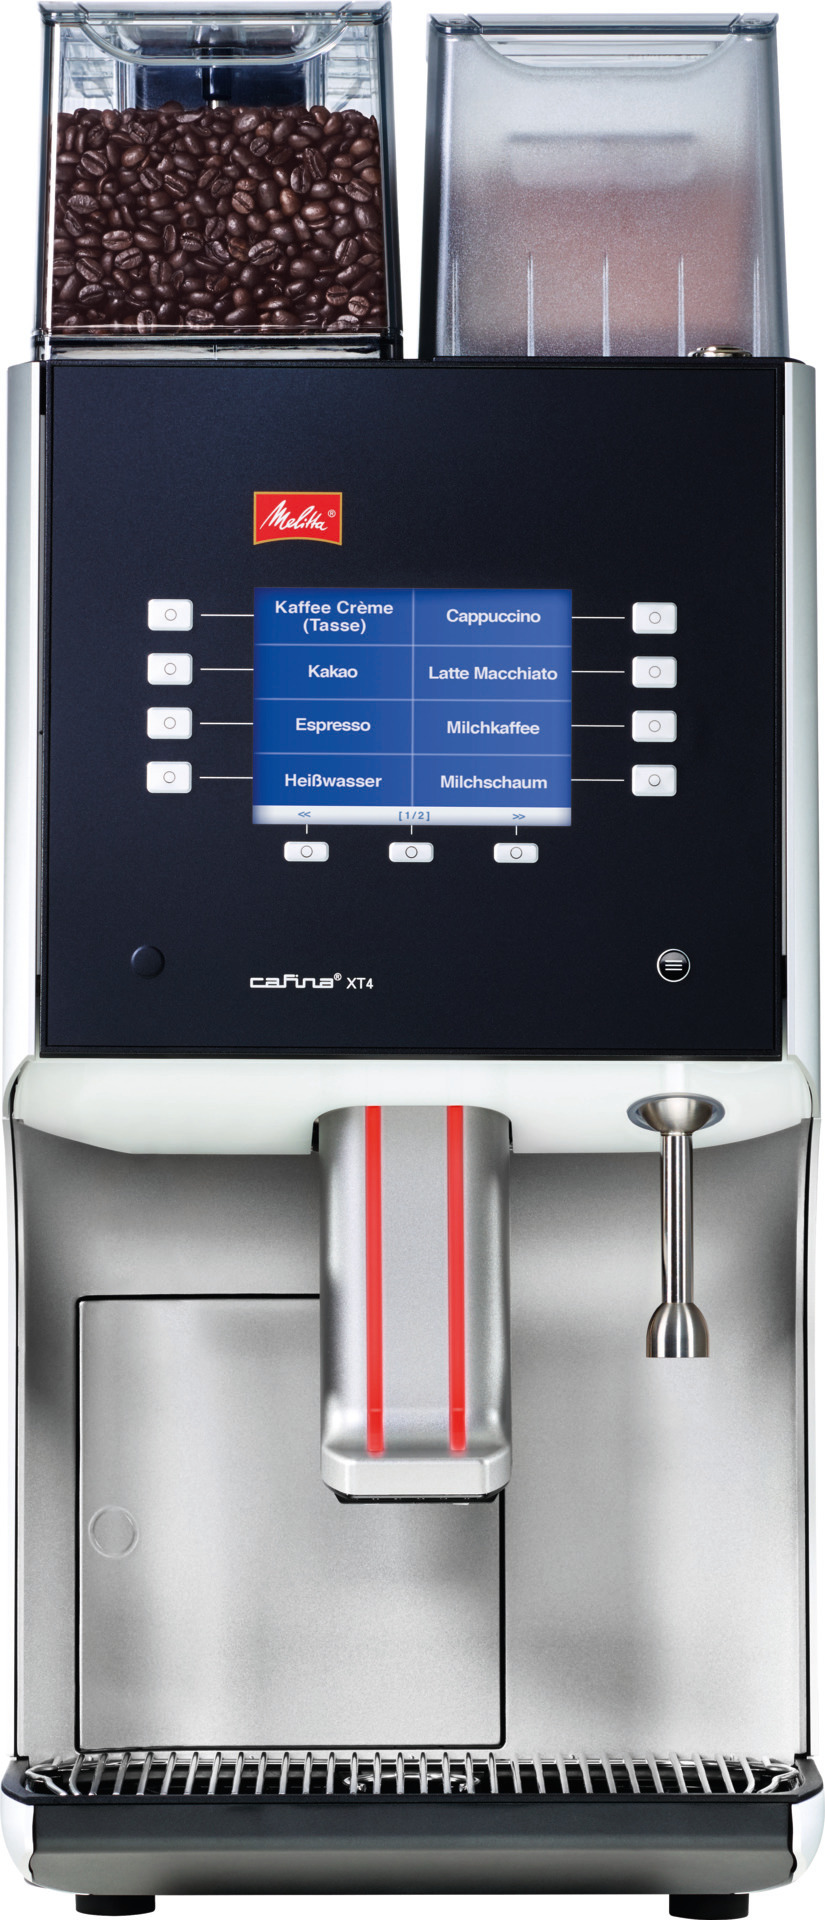 Kaffeevollautomat Cafina XT4  2-Mühlen-Gerät bis 150 Tassen/h